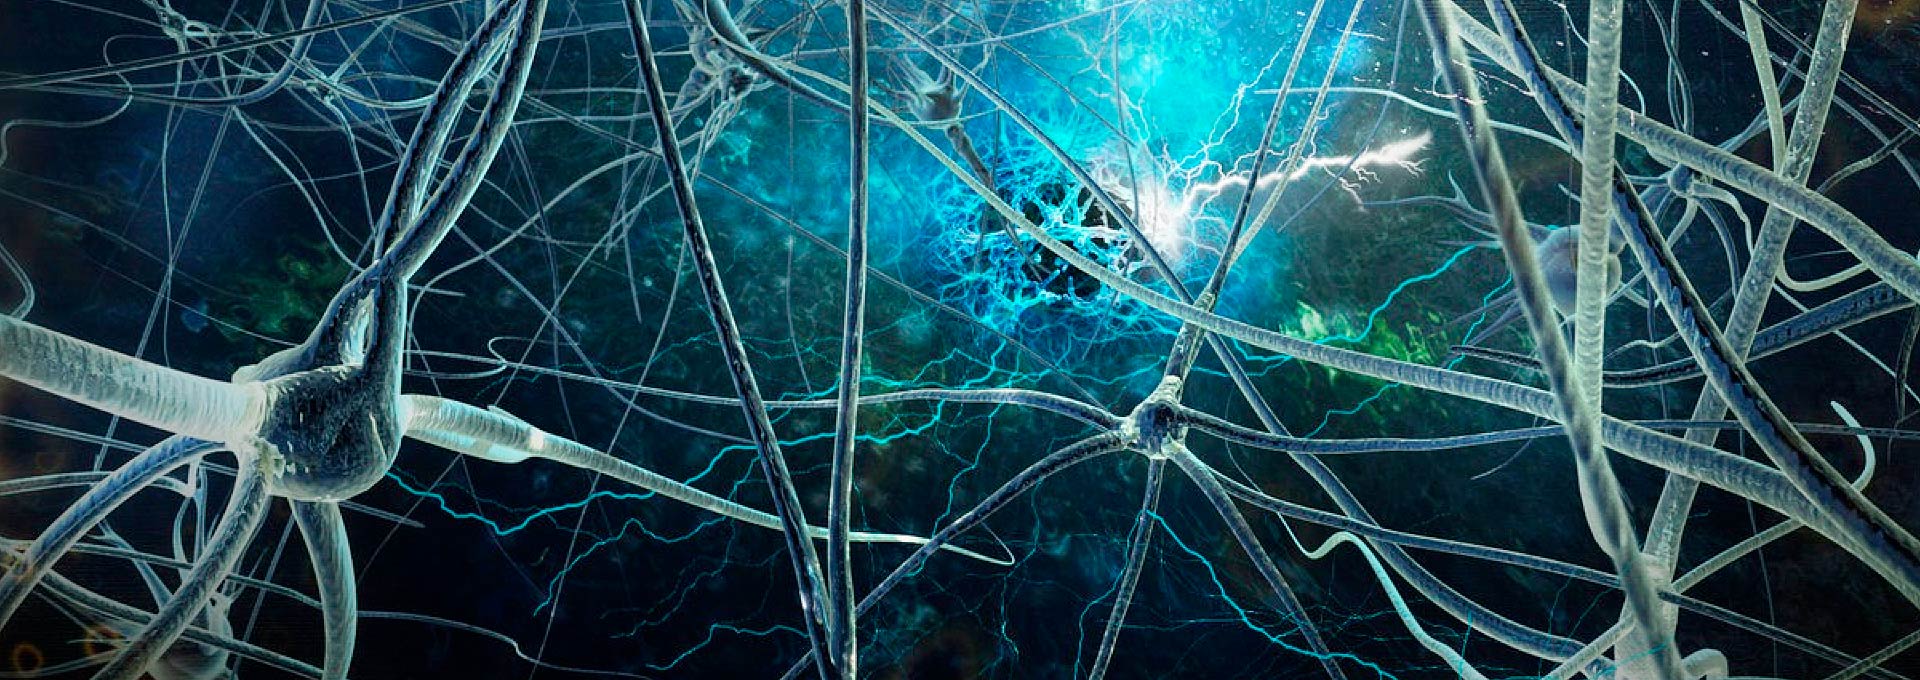 Circuitos neuronais | Foto: Free Images | sxc.hu